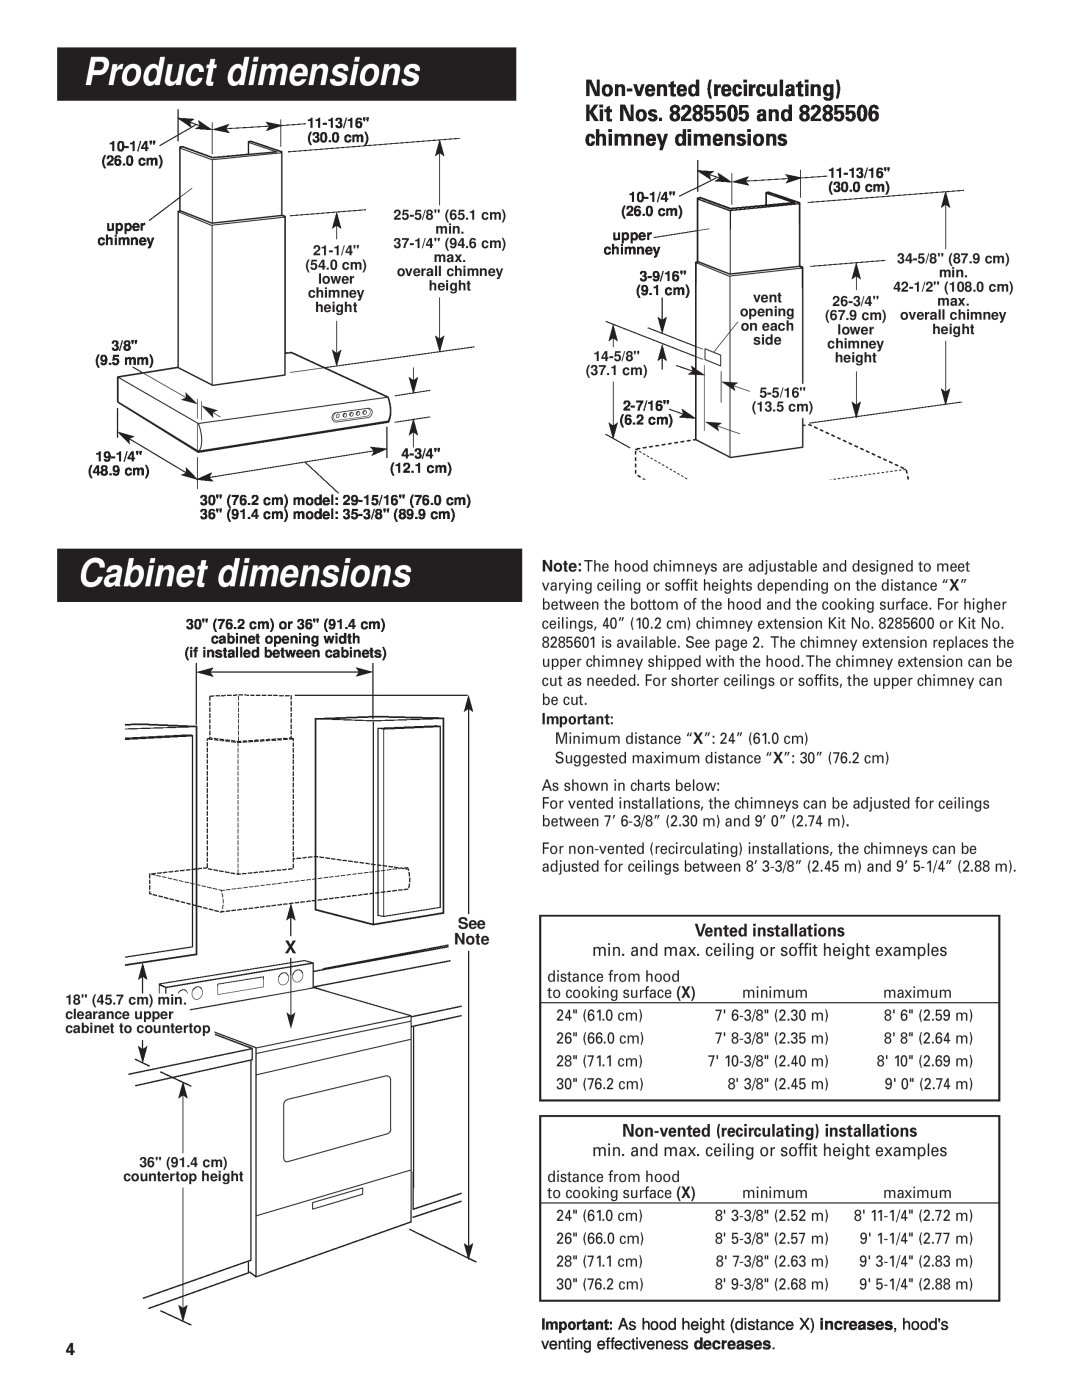 KitchenAid Pro Line Series Product dimensions, Cabinet dimensions, chimney dimensions, Vented installations 